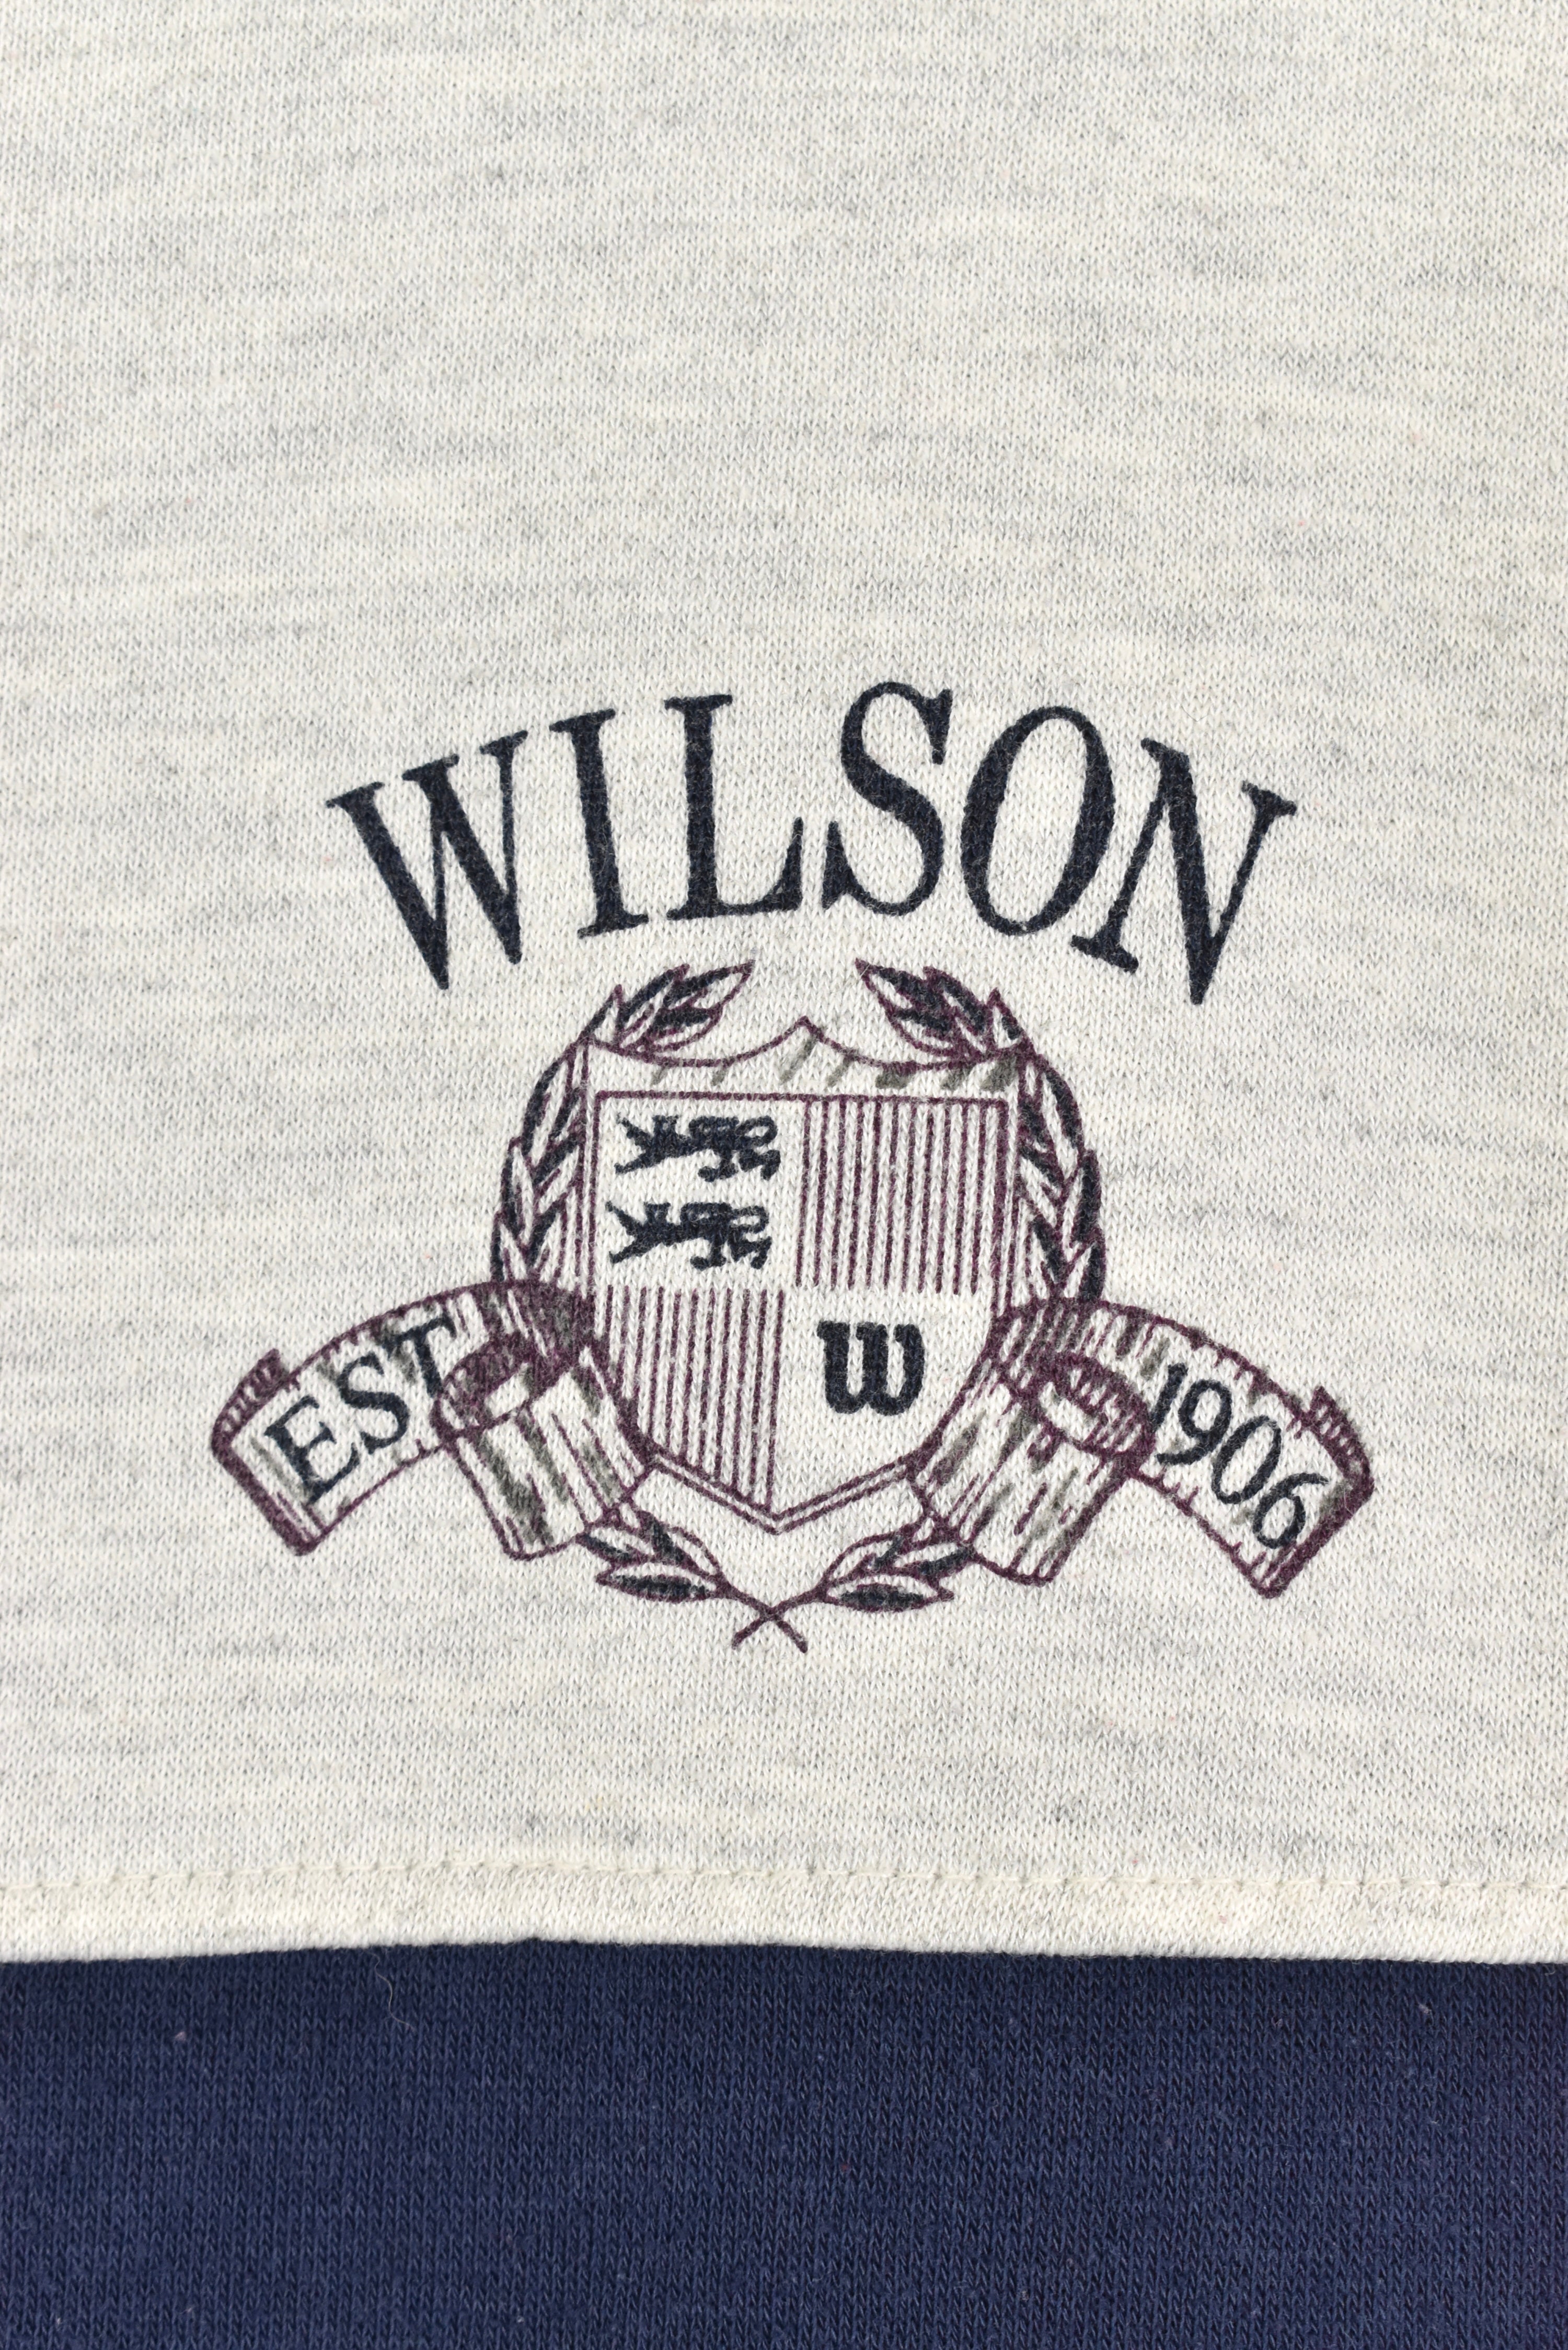 Vintage Wilson sweatshirt, grey graphic crewneck - AU Large WILSON